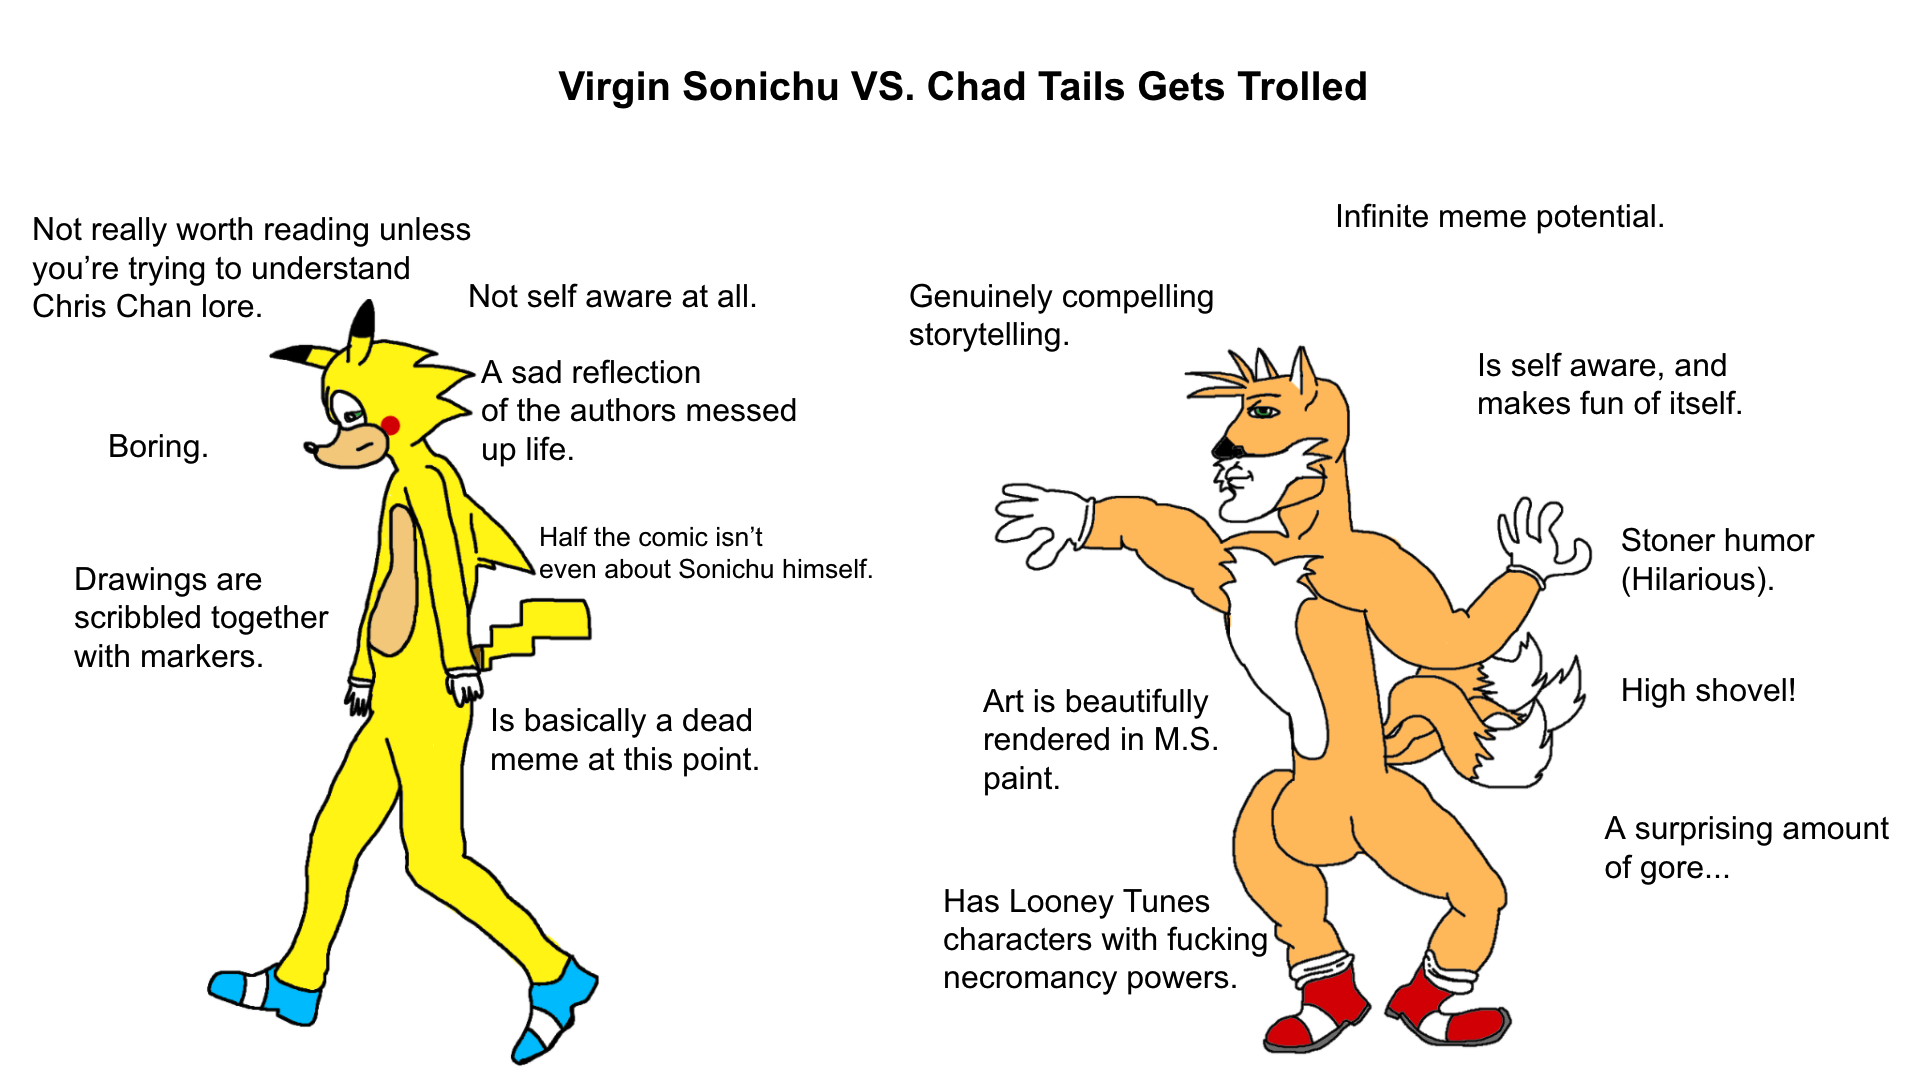 Virgin Sonichu Vs Chad Tails Gets Trolled